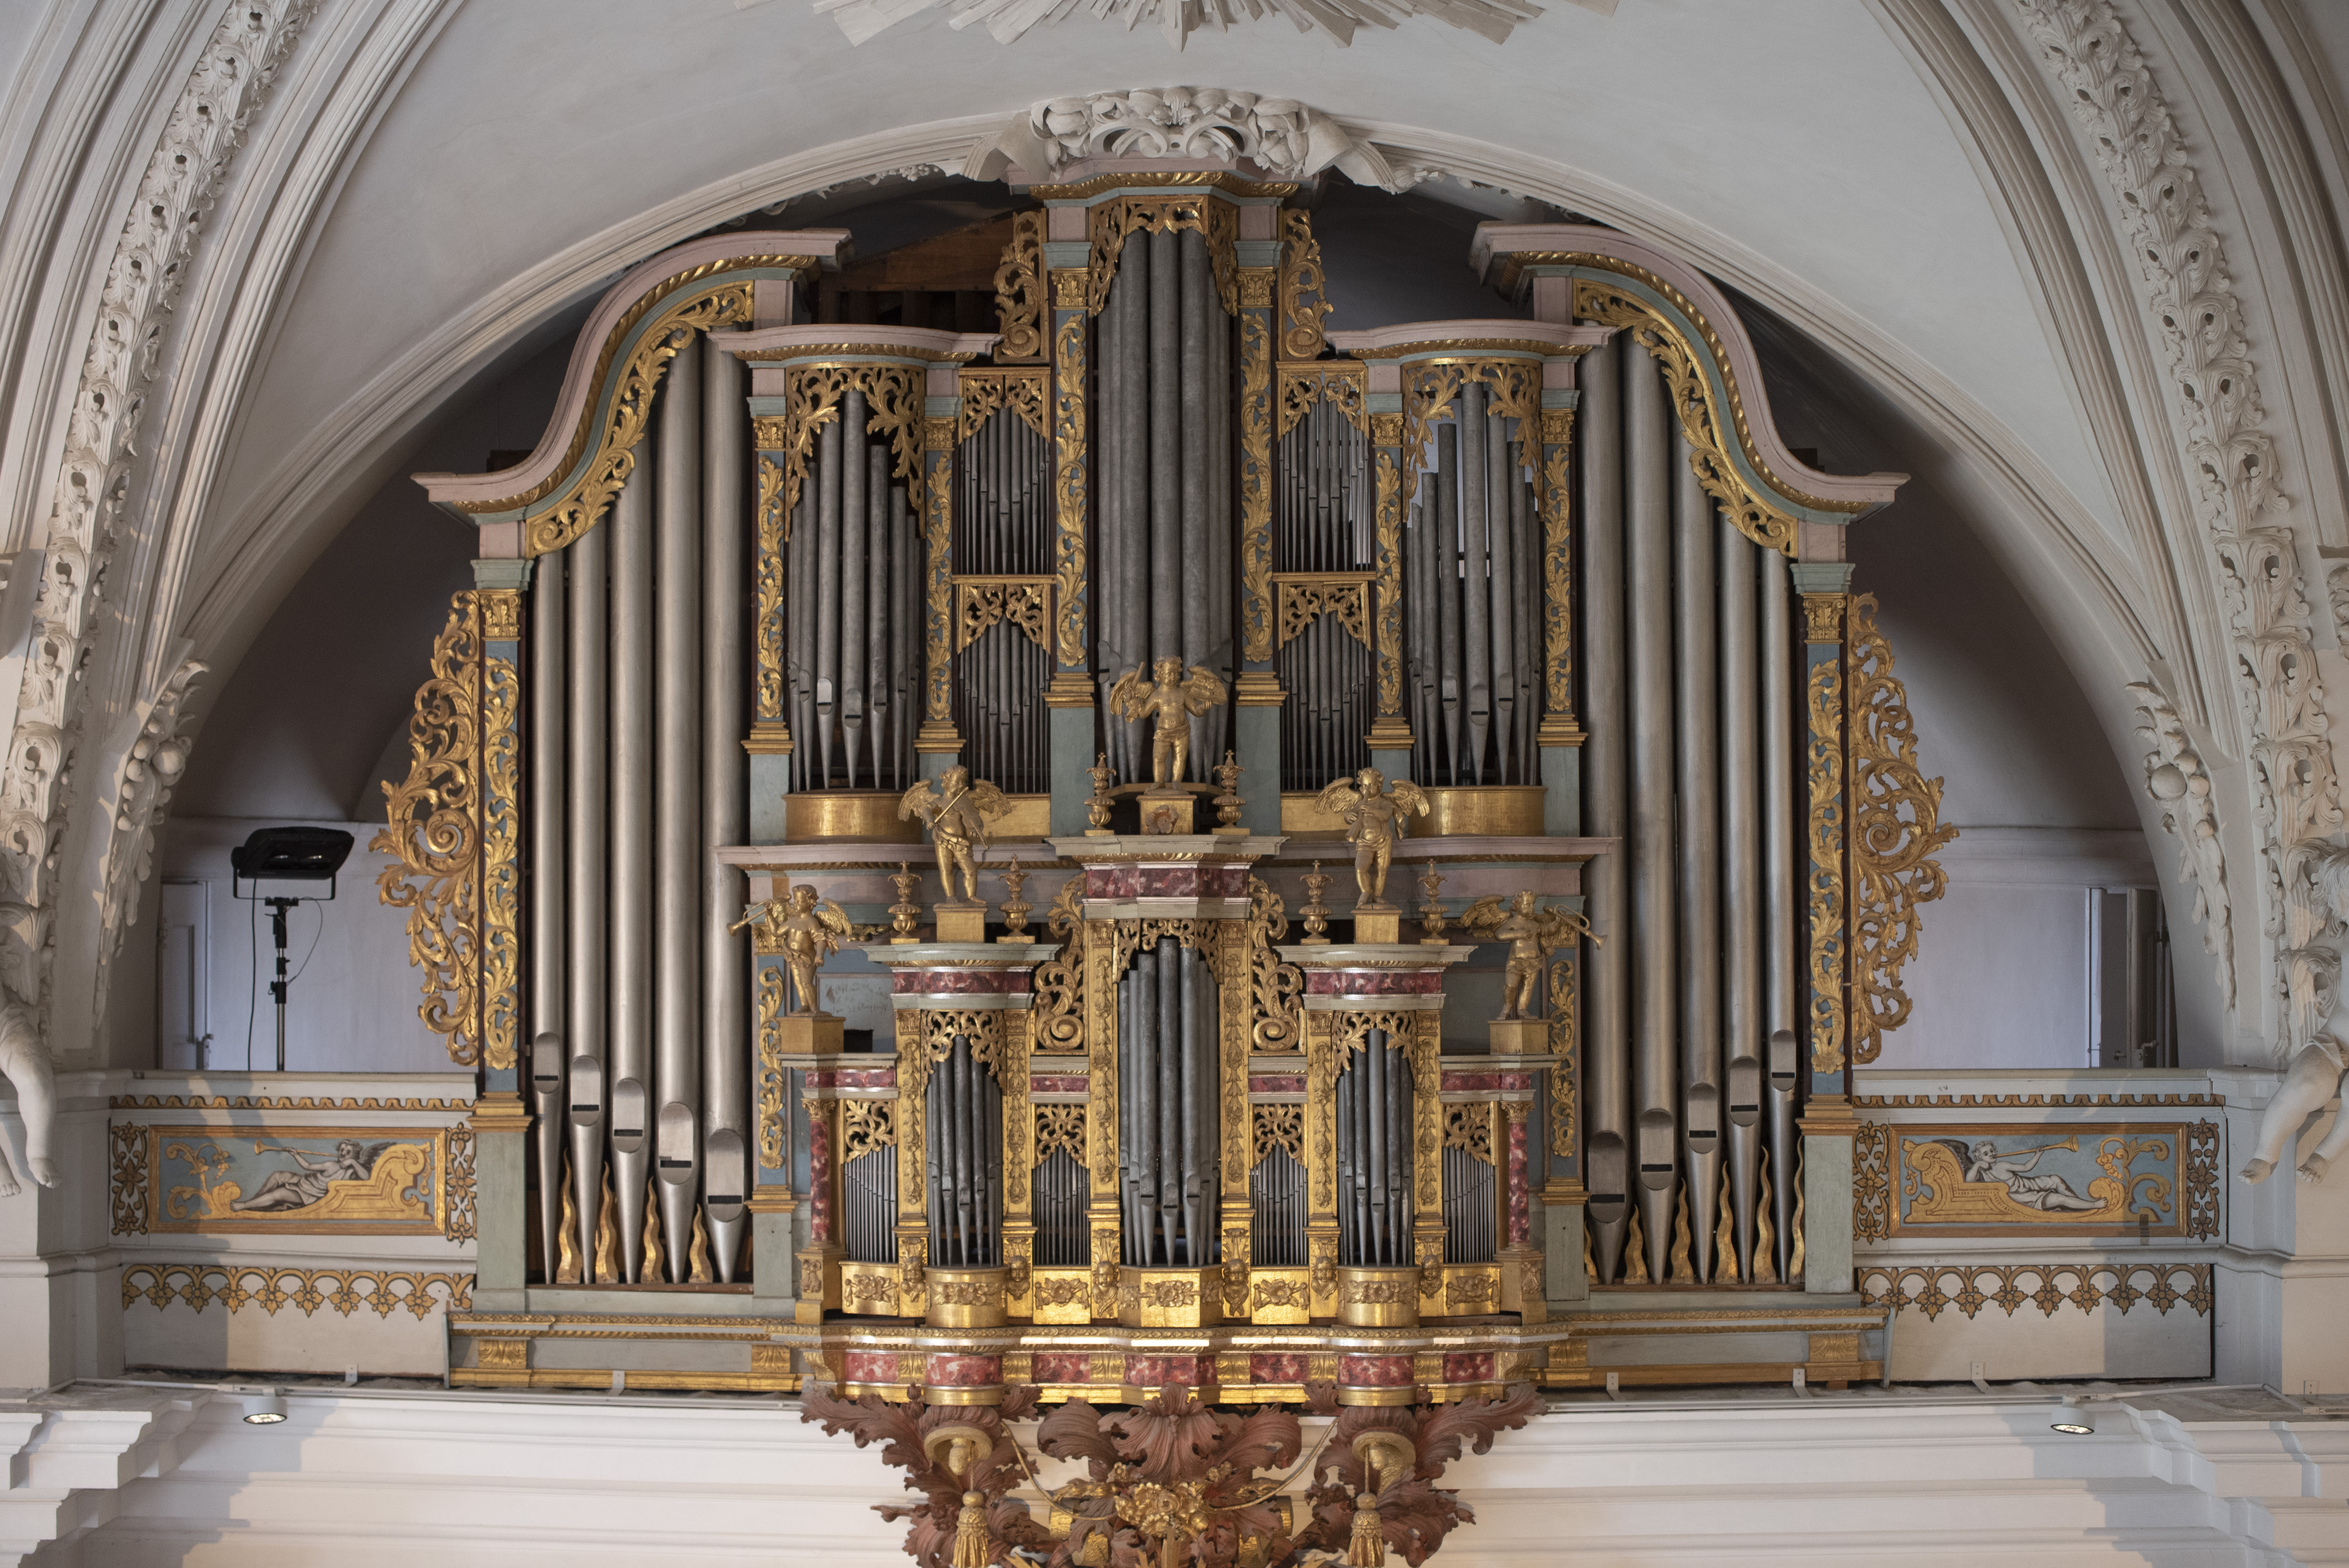 (c) Orgel-projekt-weilburg.com